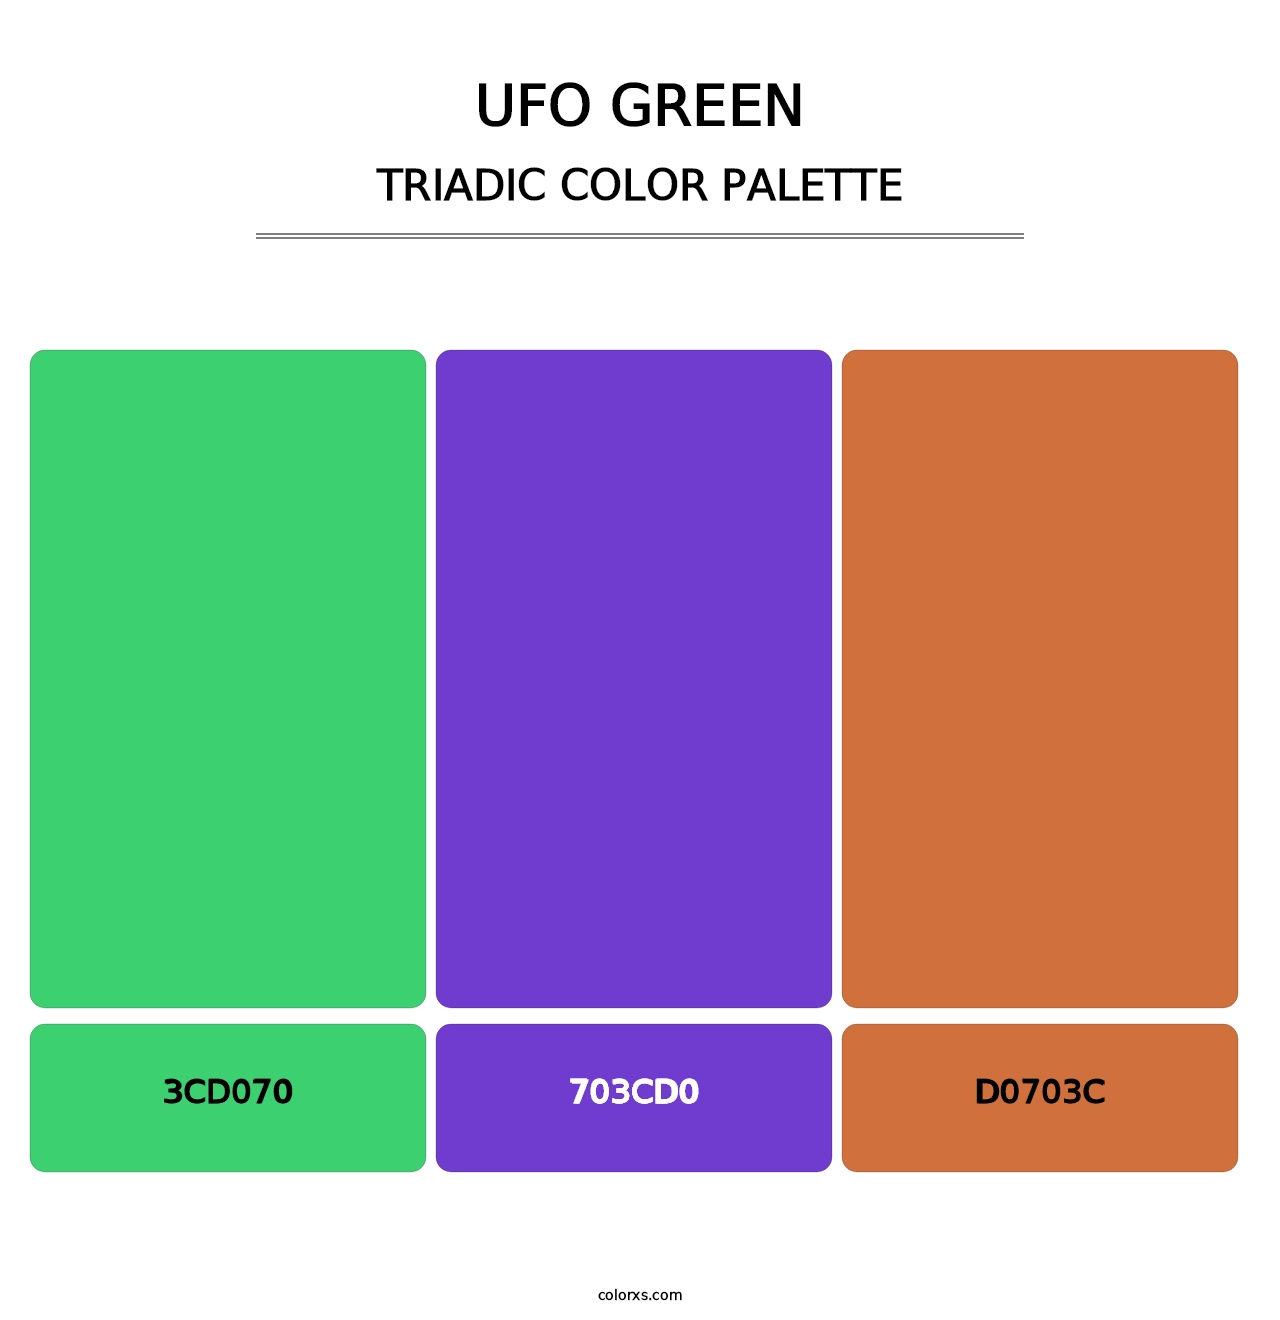 UFO Green - Triadic Color Palette